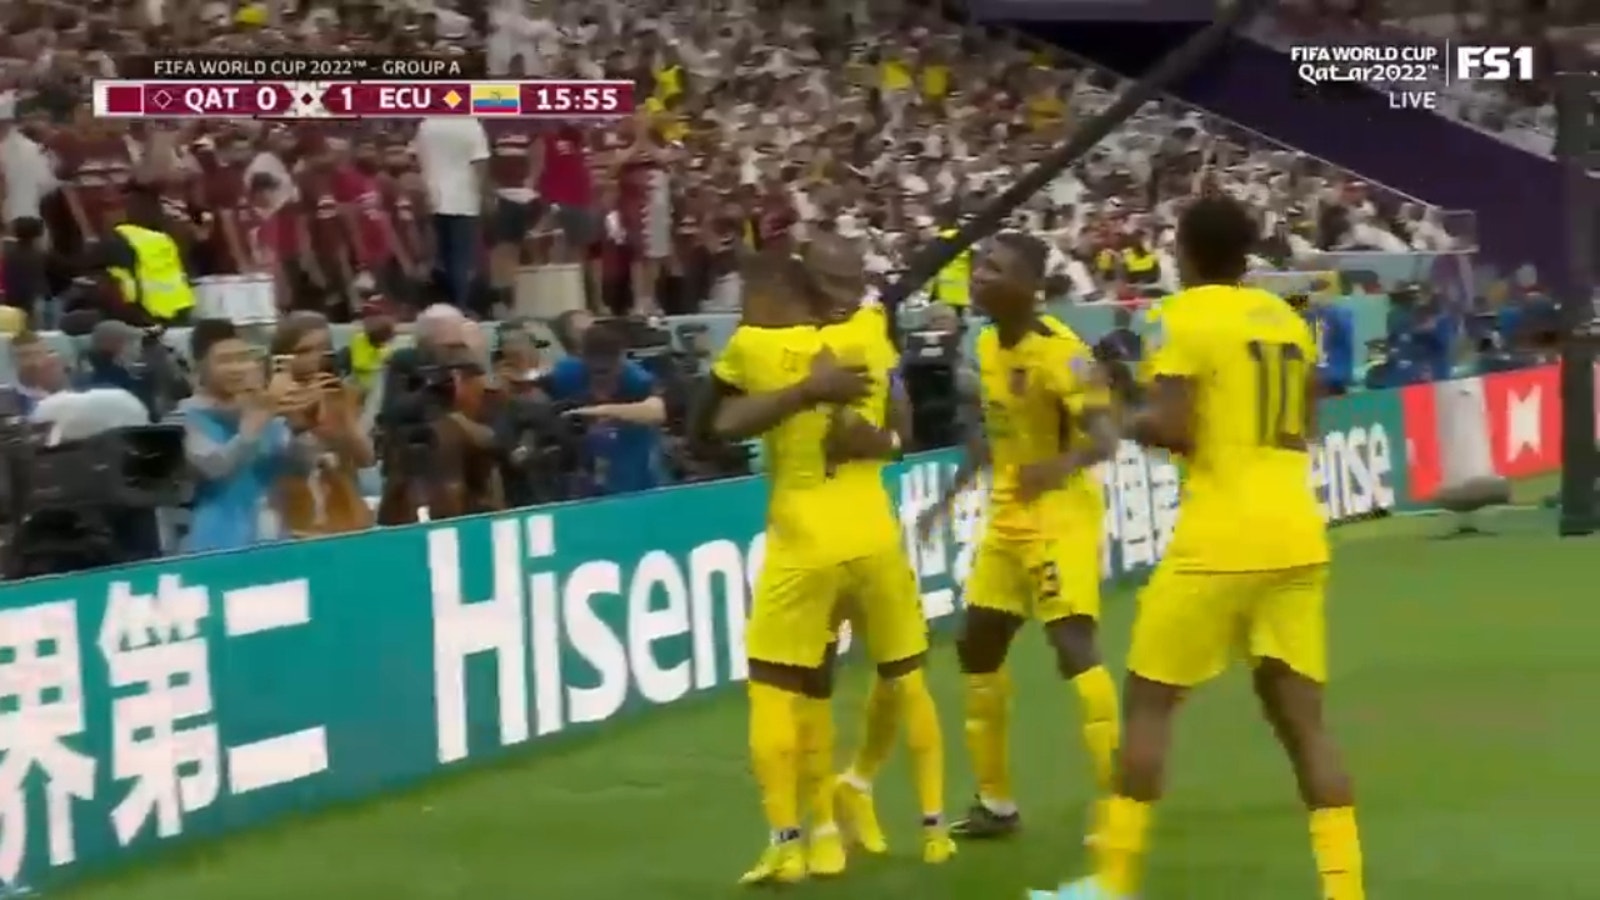 Enna Valencia of Ecuador fouled in the penalty area and PK scored.Qatar 